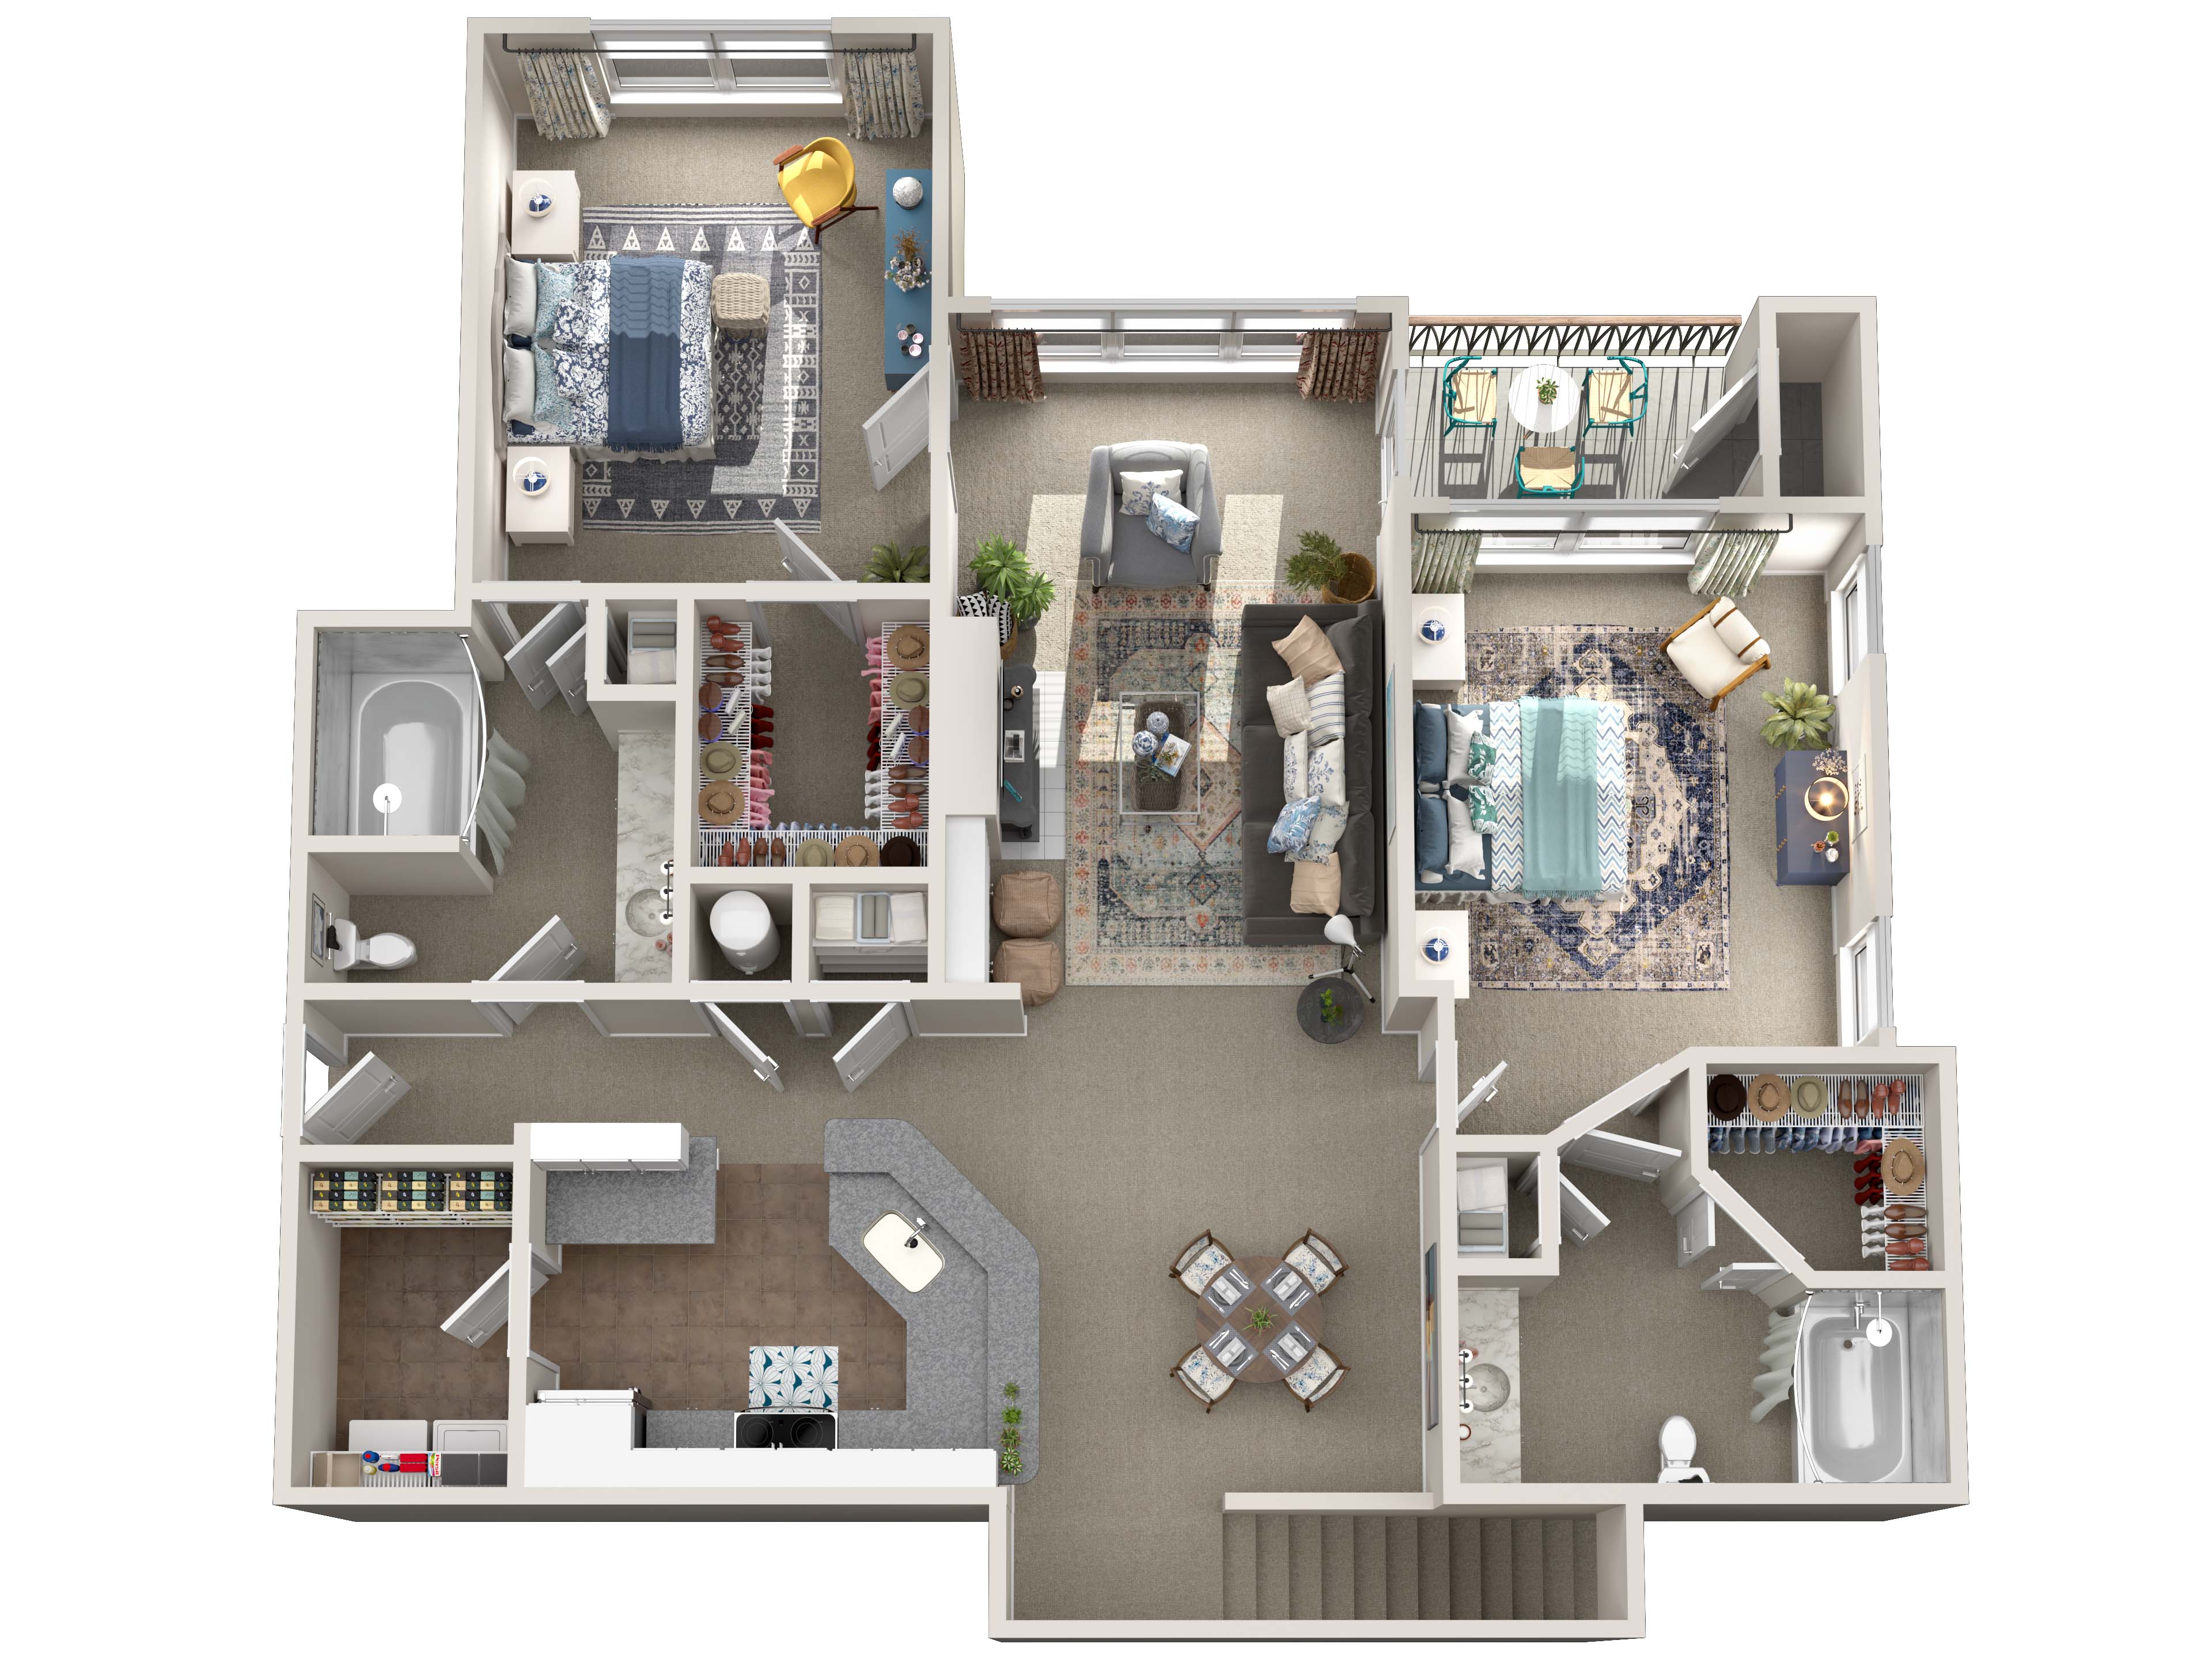 Windward Place Apartments - Floorplan - B3 | Avail. w/ Garage*